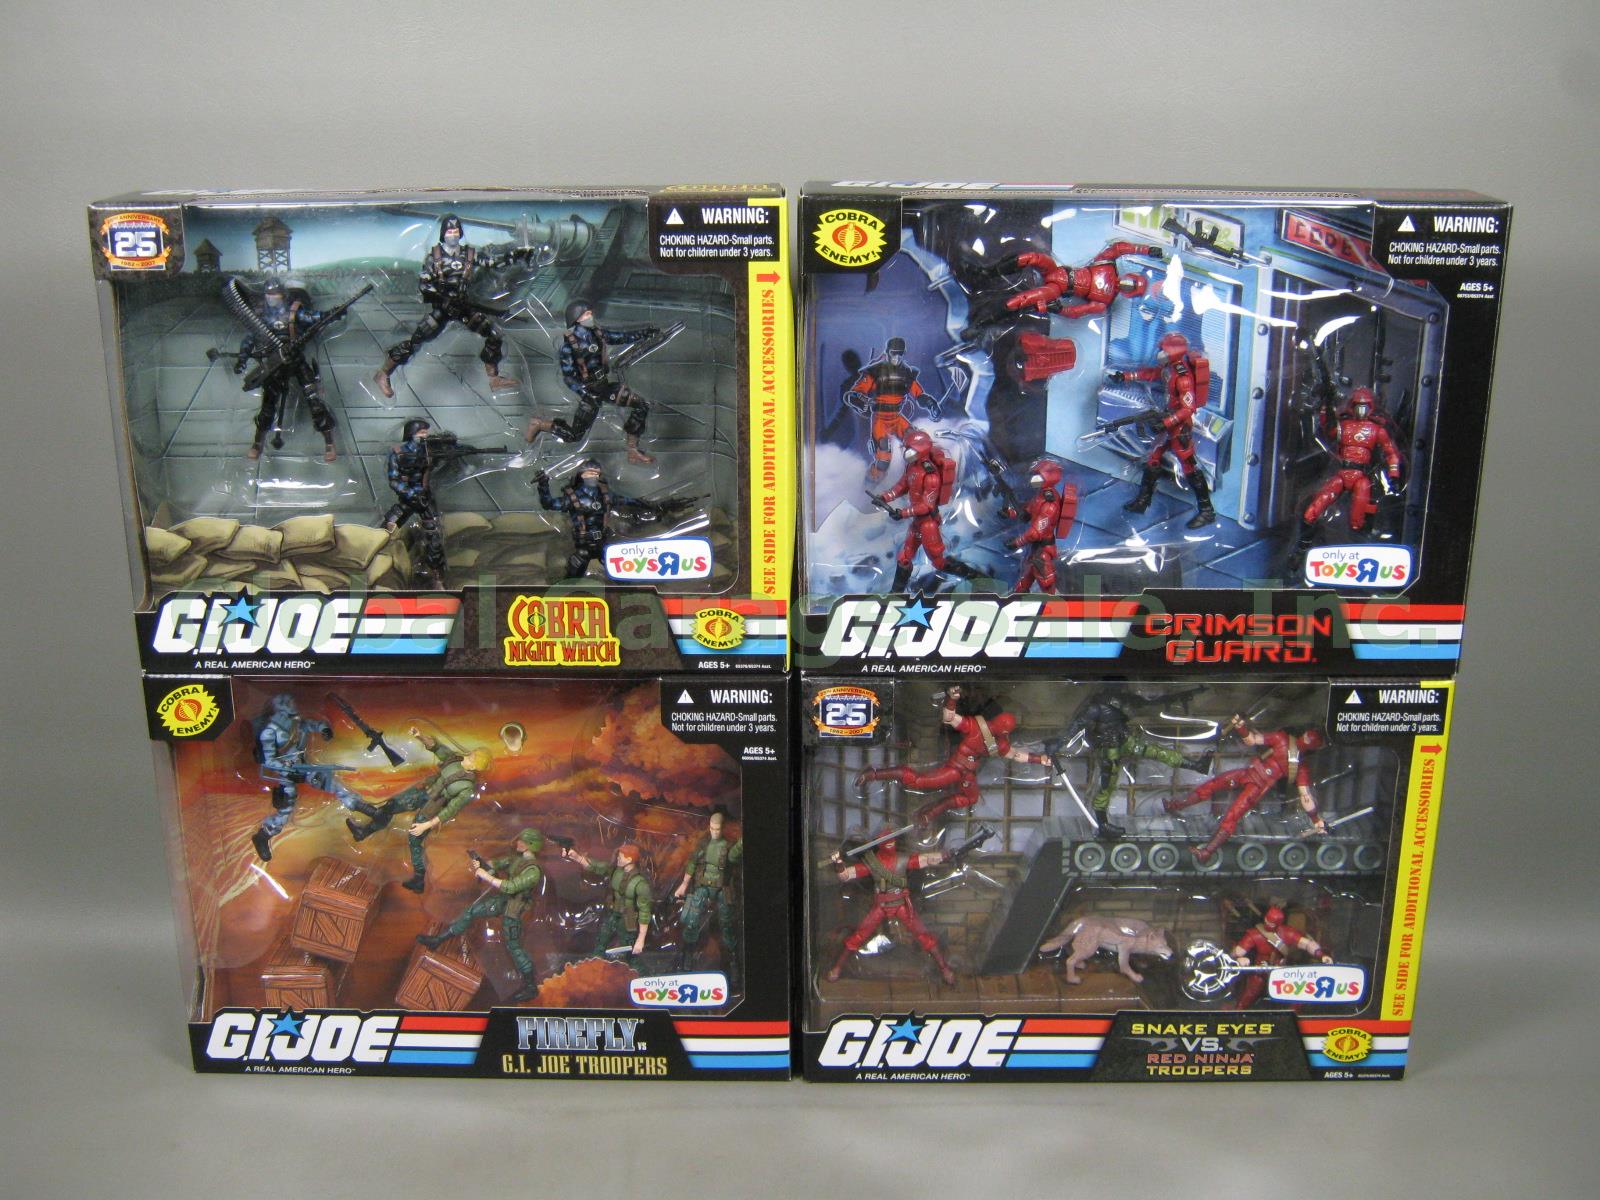 4 GI Joe Figure Sets Crimson Guard Firefly Trooper Cobra Night Watch Snake Eyes+